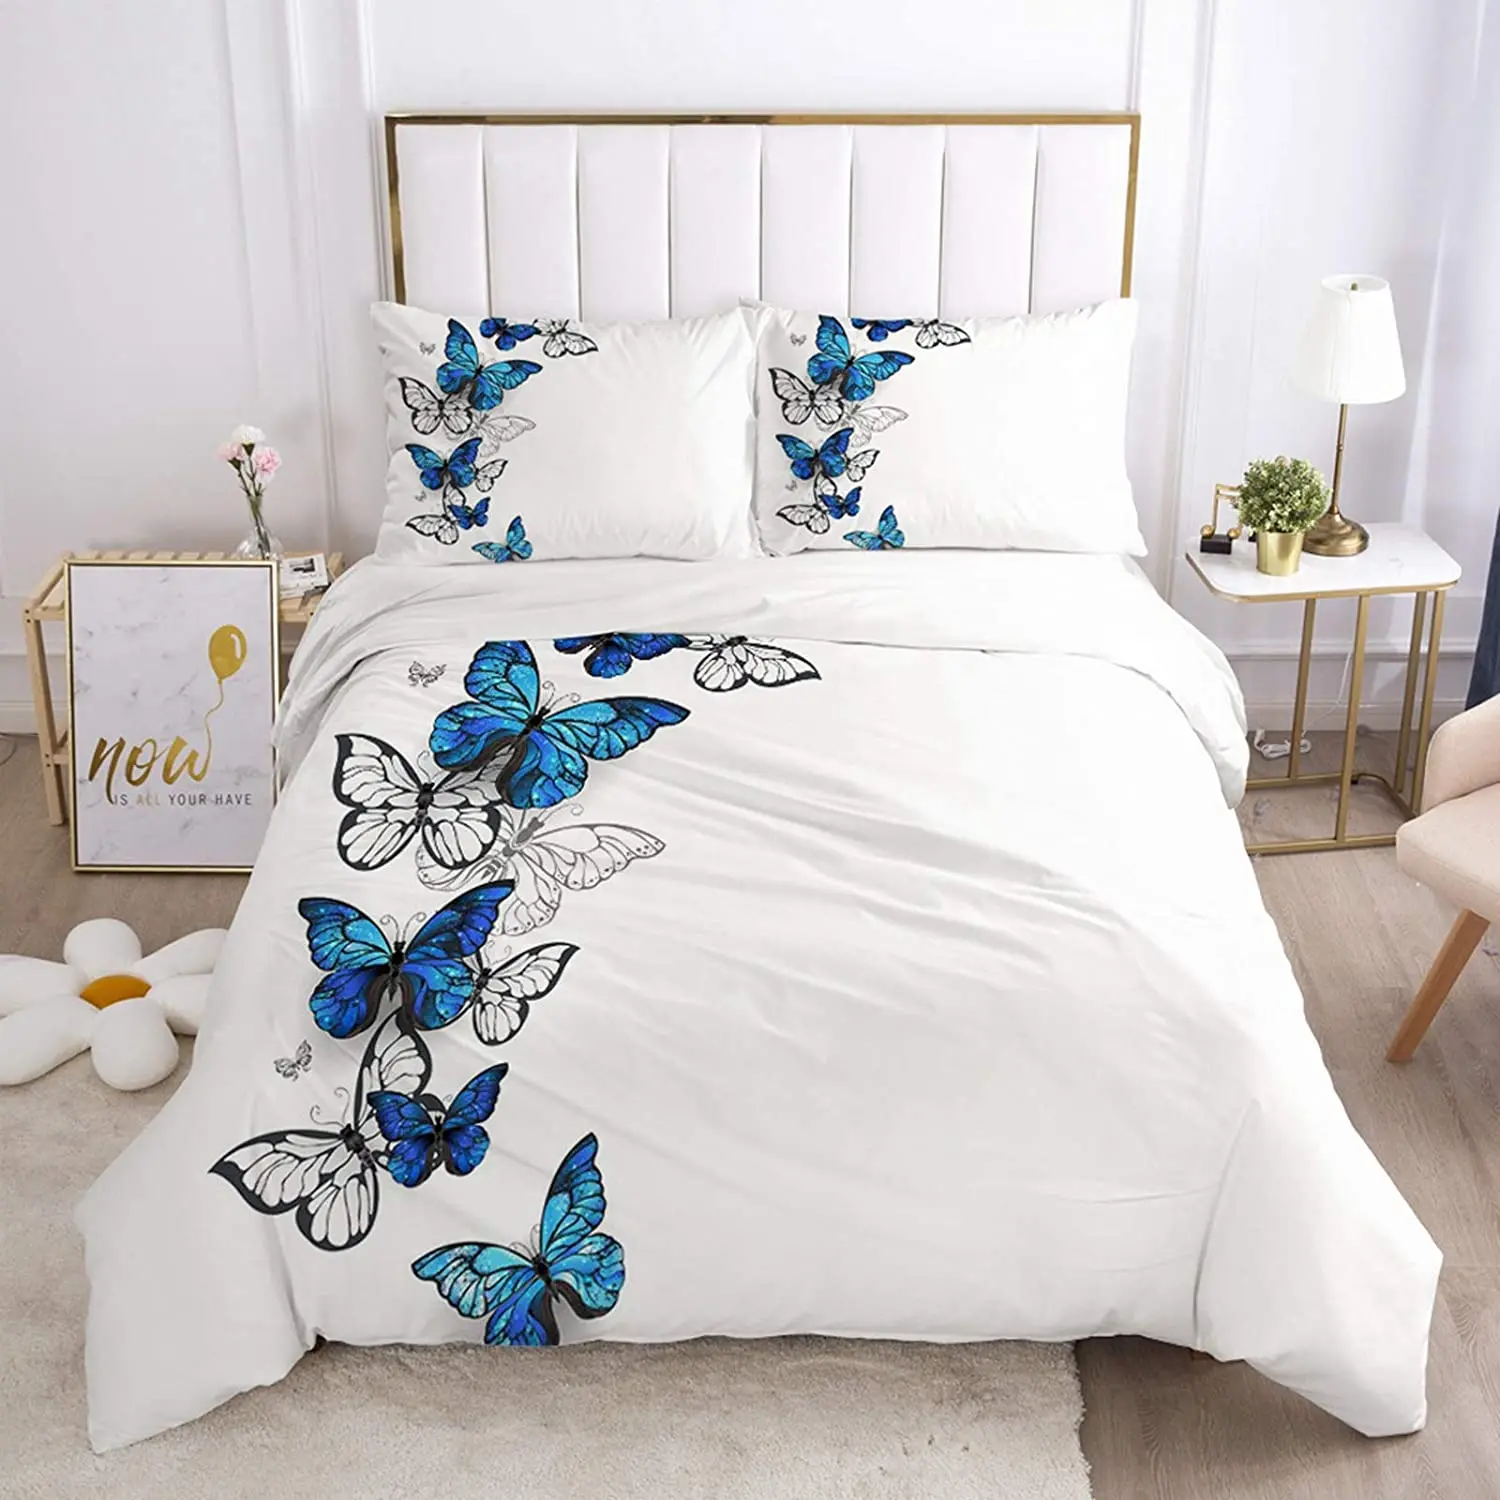 

Kelli Kelly Butterfly Duvet Cover Queen Size for Girls,3 PCS Blue Butterflies Bedding Sets Soft Microfiber White Comforter